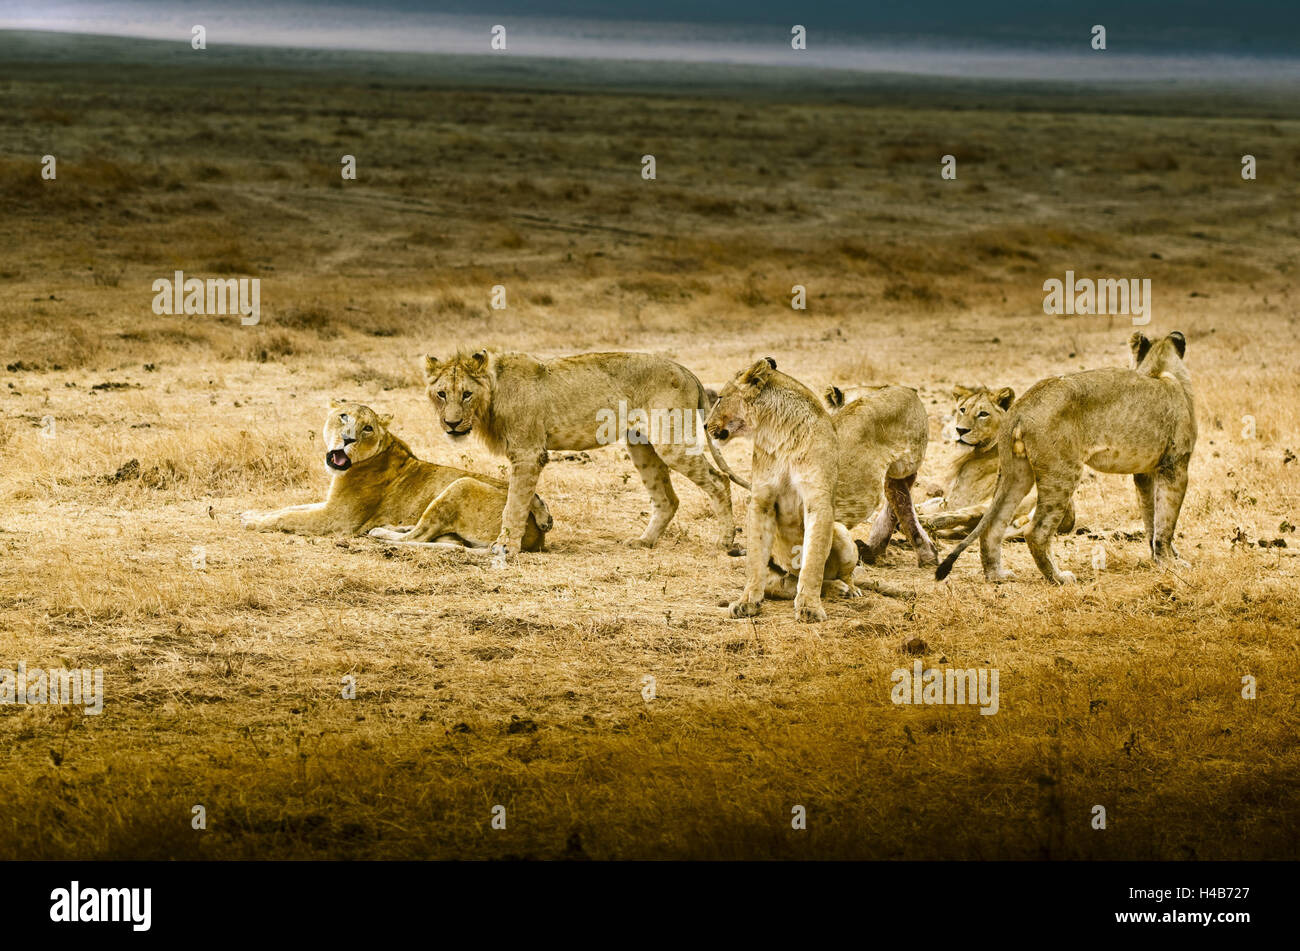 Africa, Tanzania, East Africa, crater, volcano crater, Ngorongoro, lion, Stock Photo